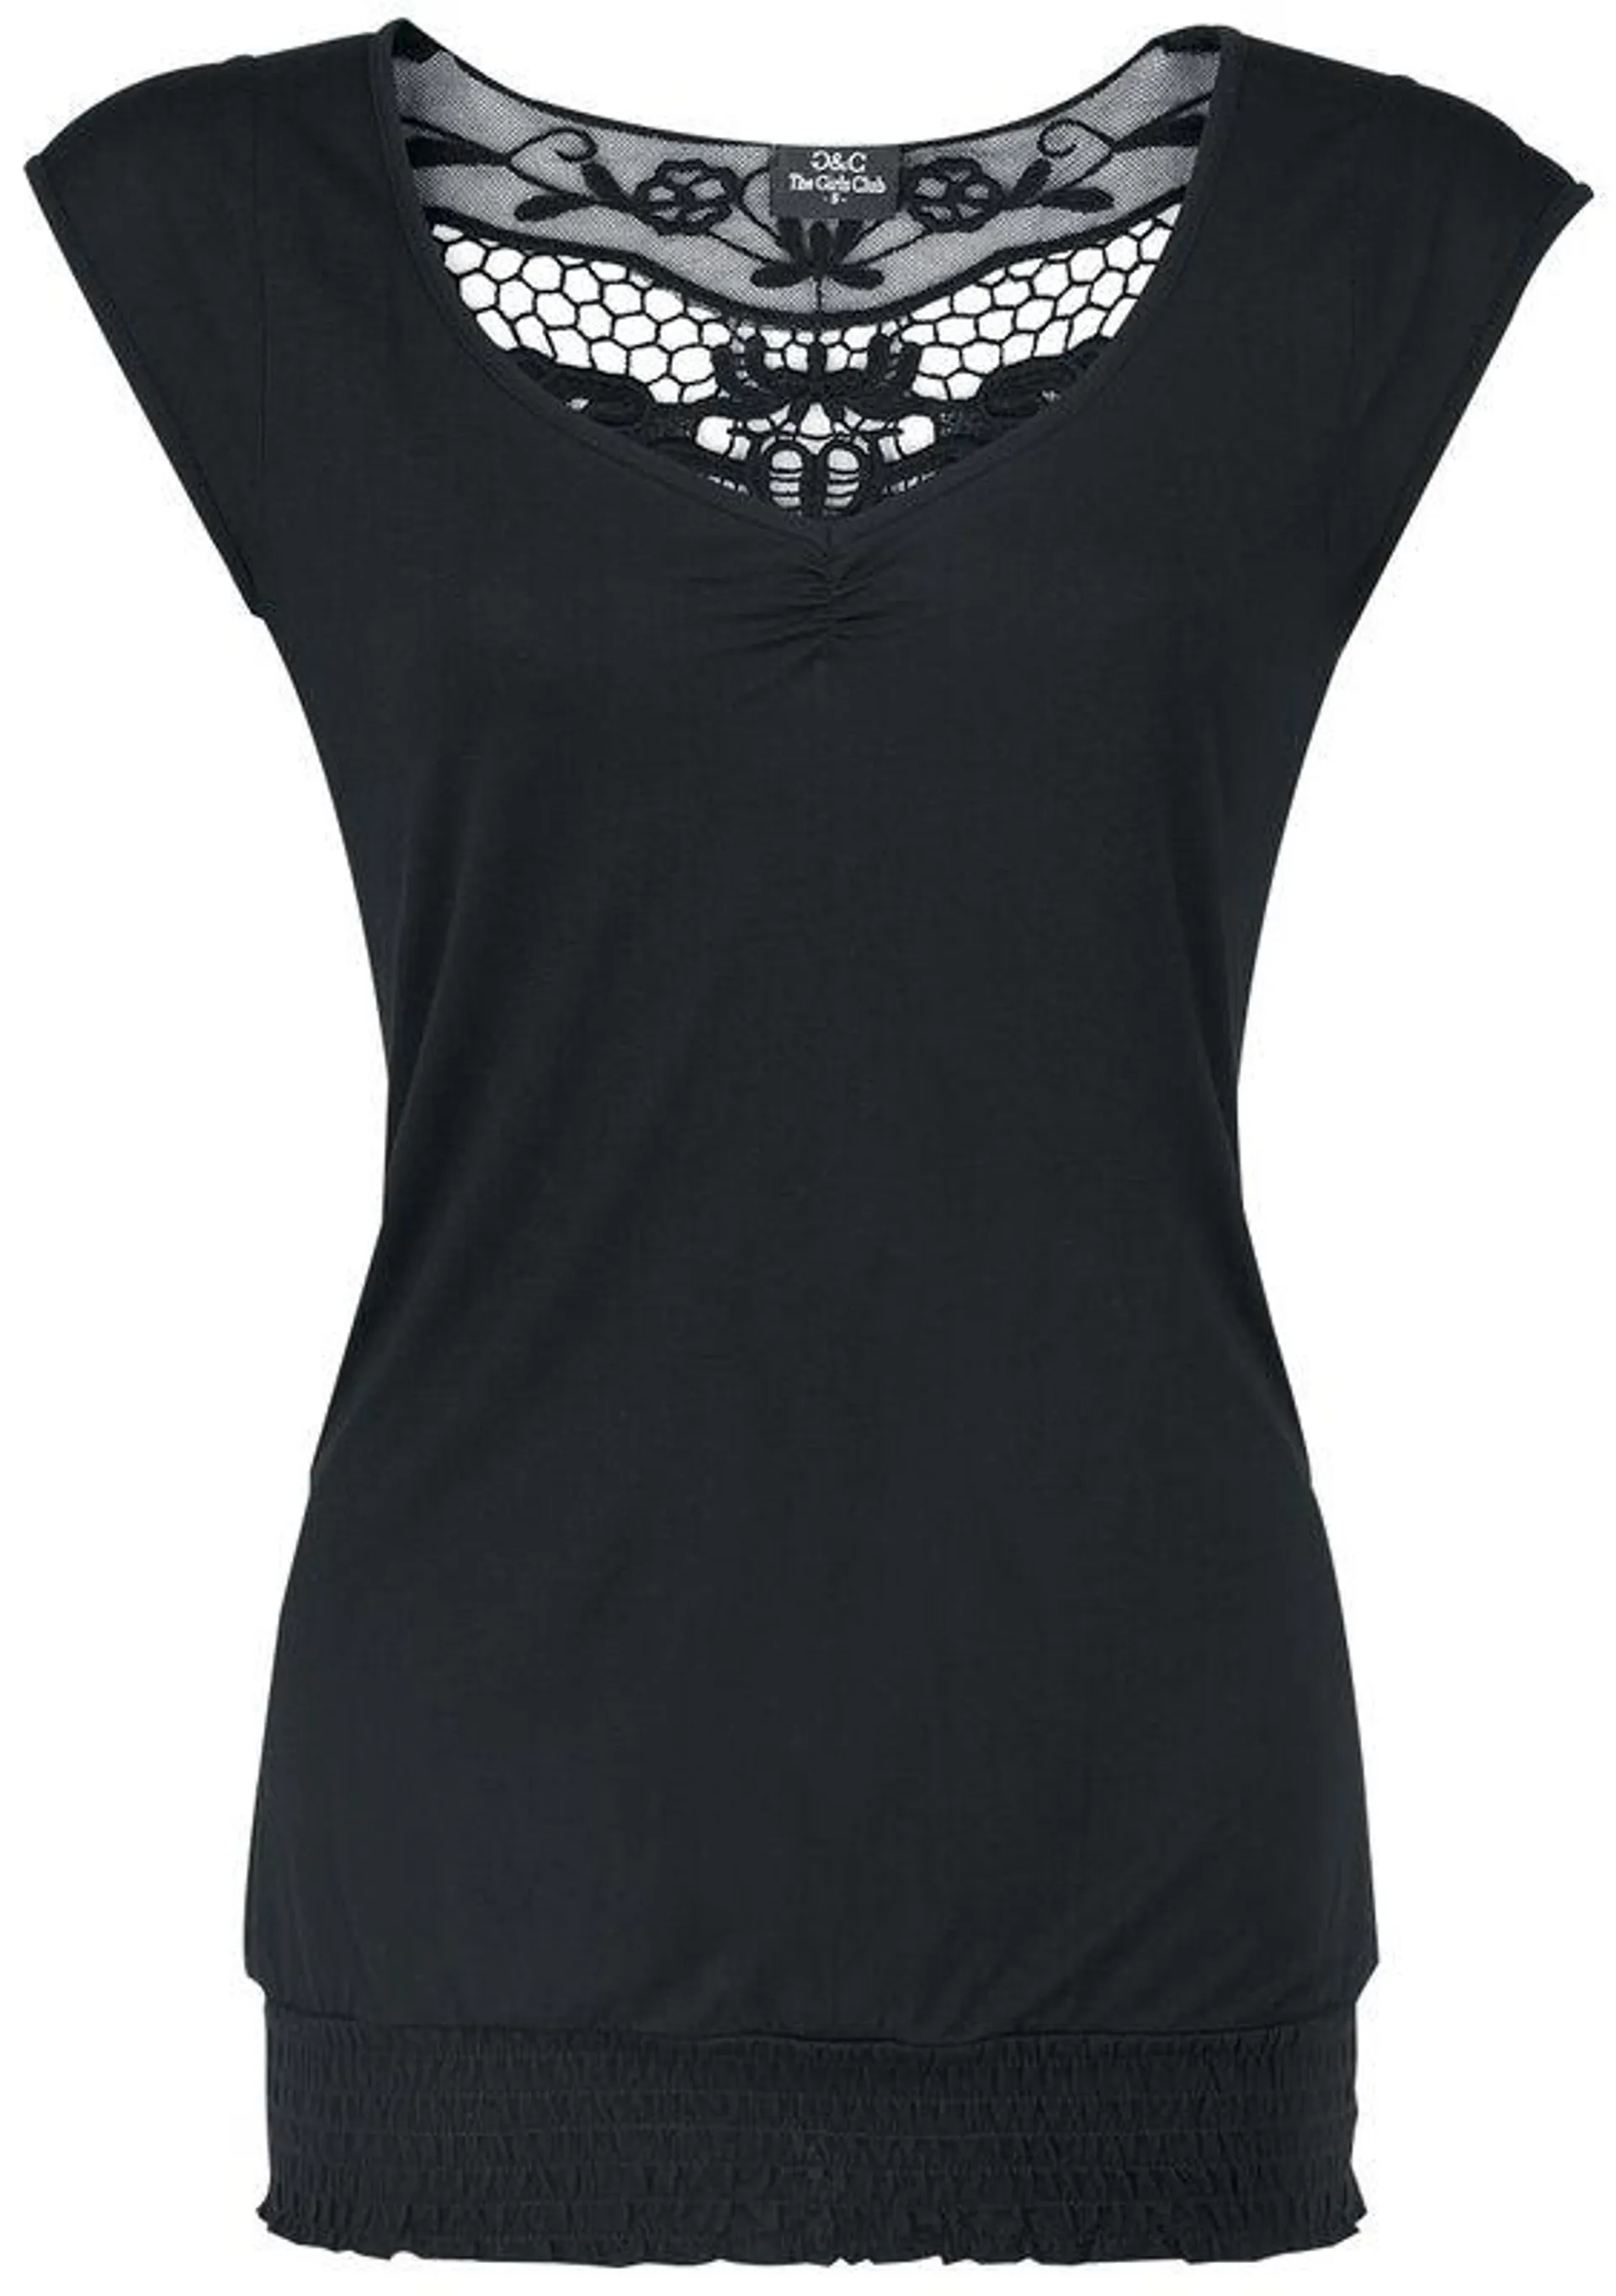 "Back Lace" Camiseta Negro de Gothicana by EMP